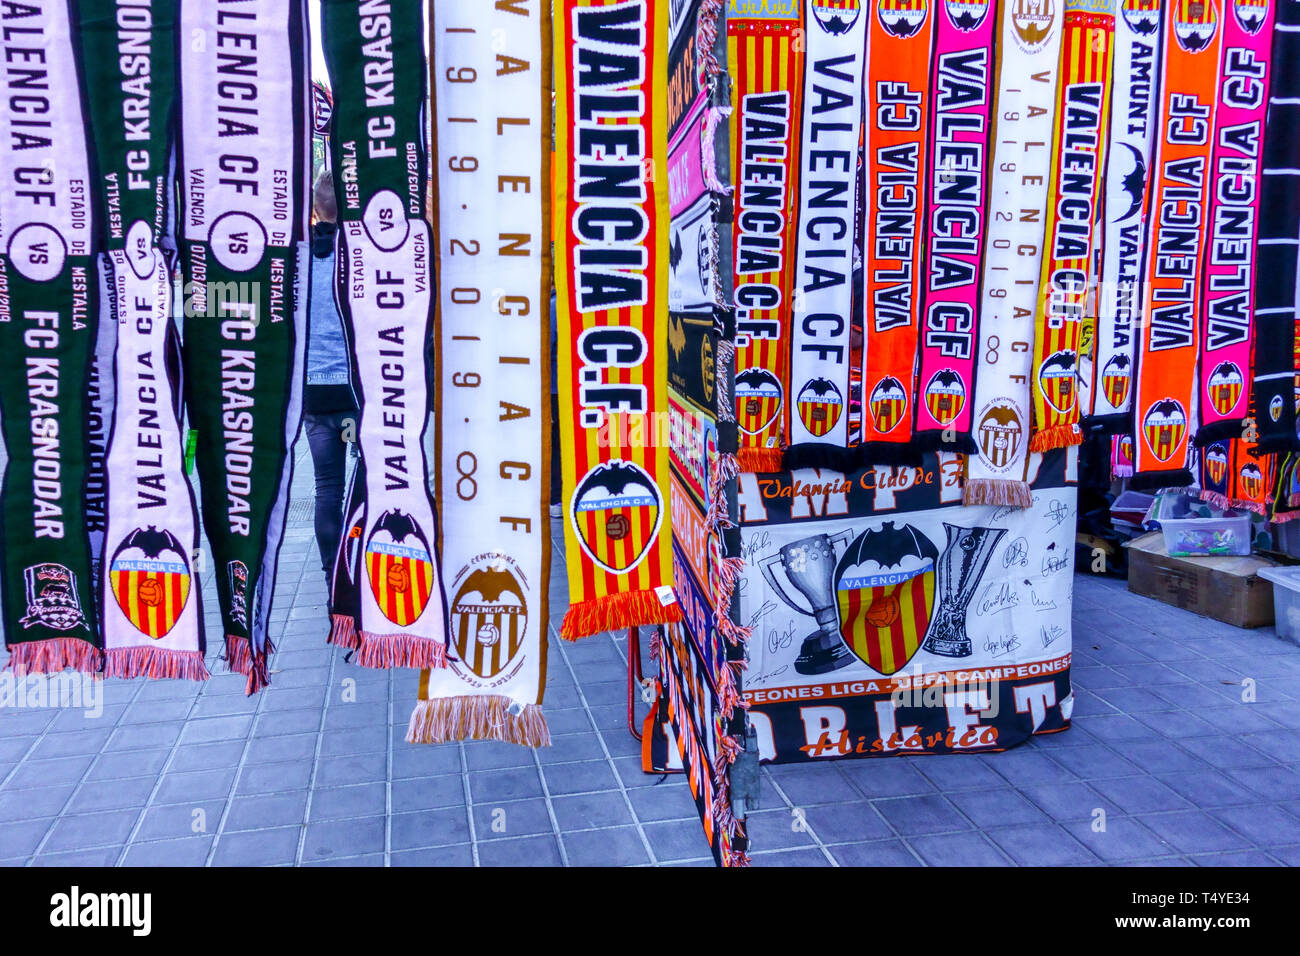 Football scarves for sale, Valencia CF, market stall, Spain Europe Stock Photo